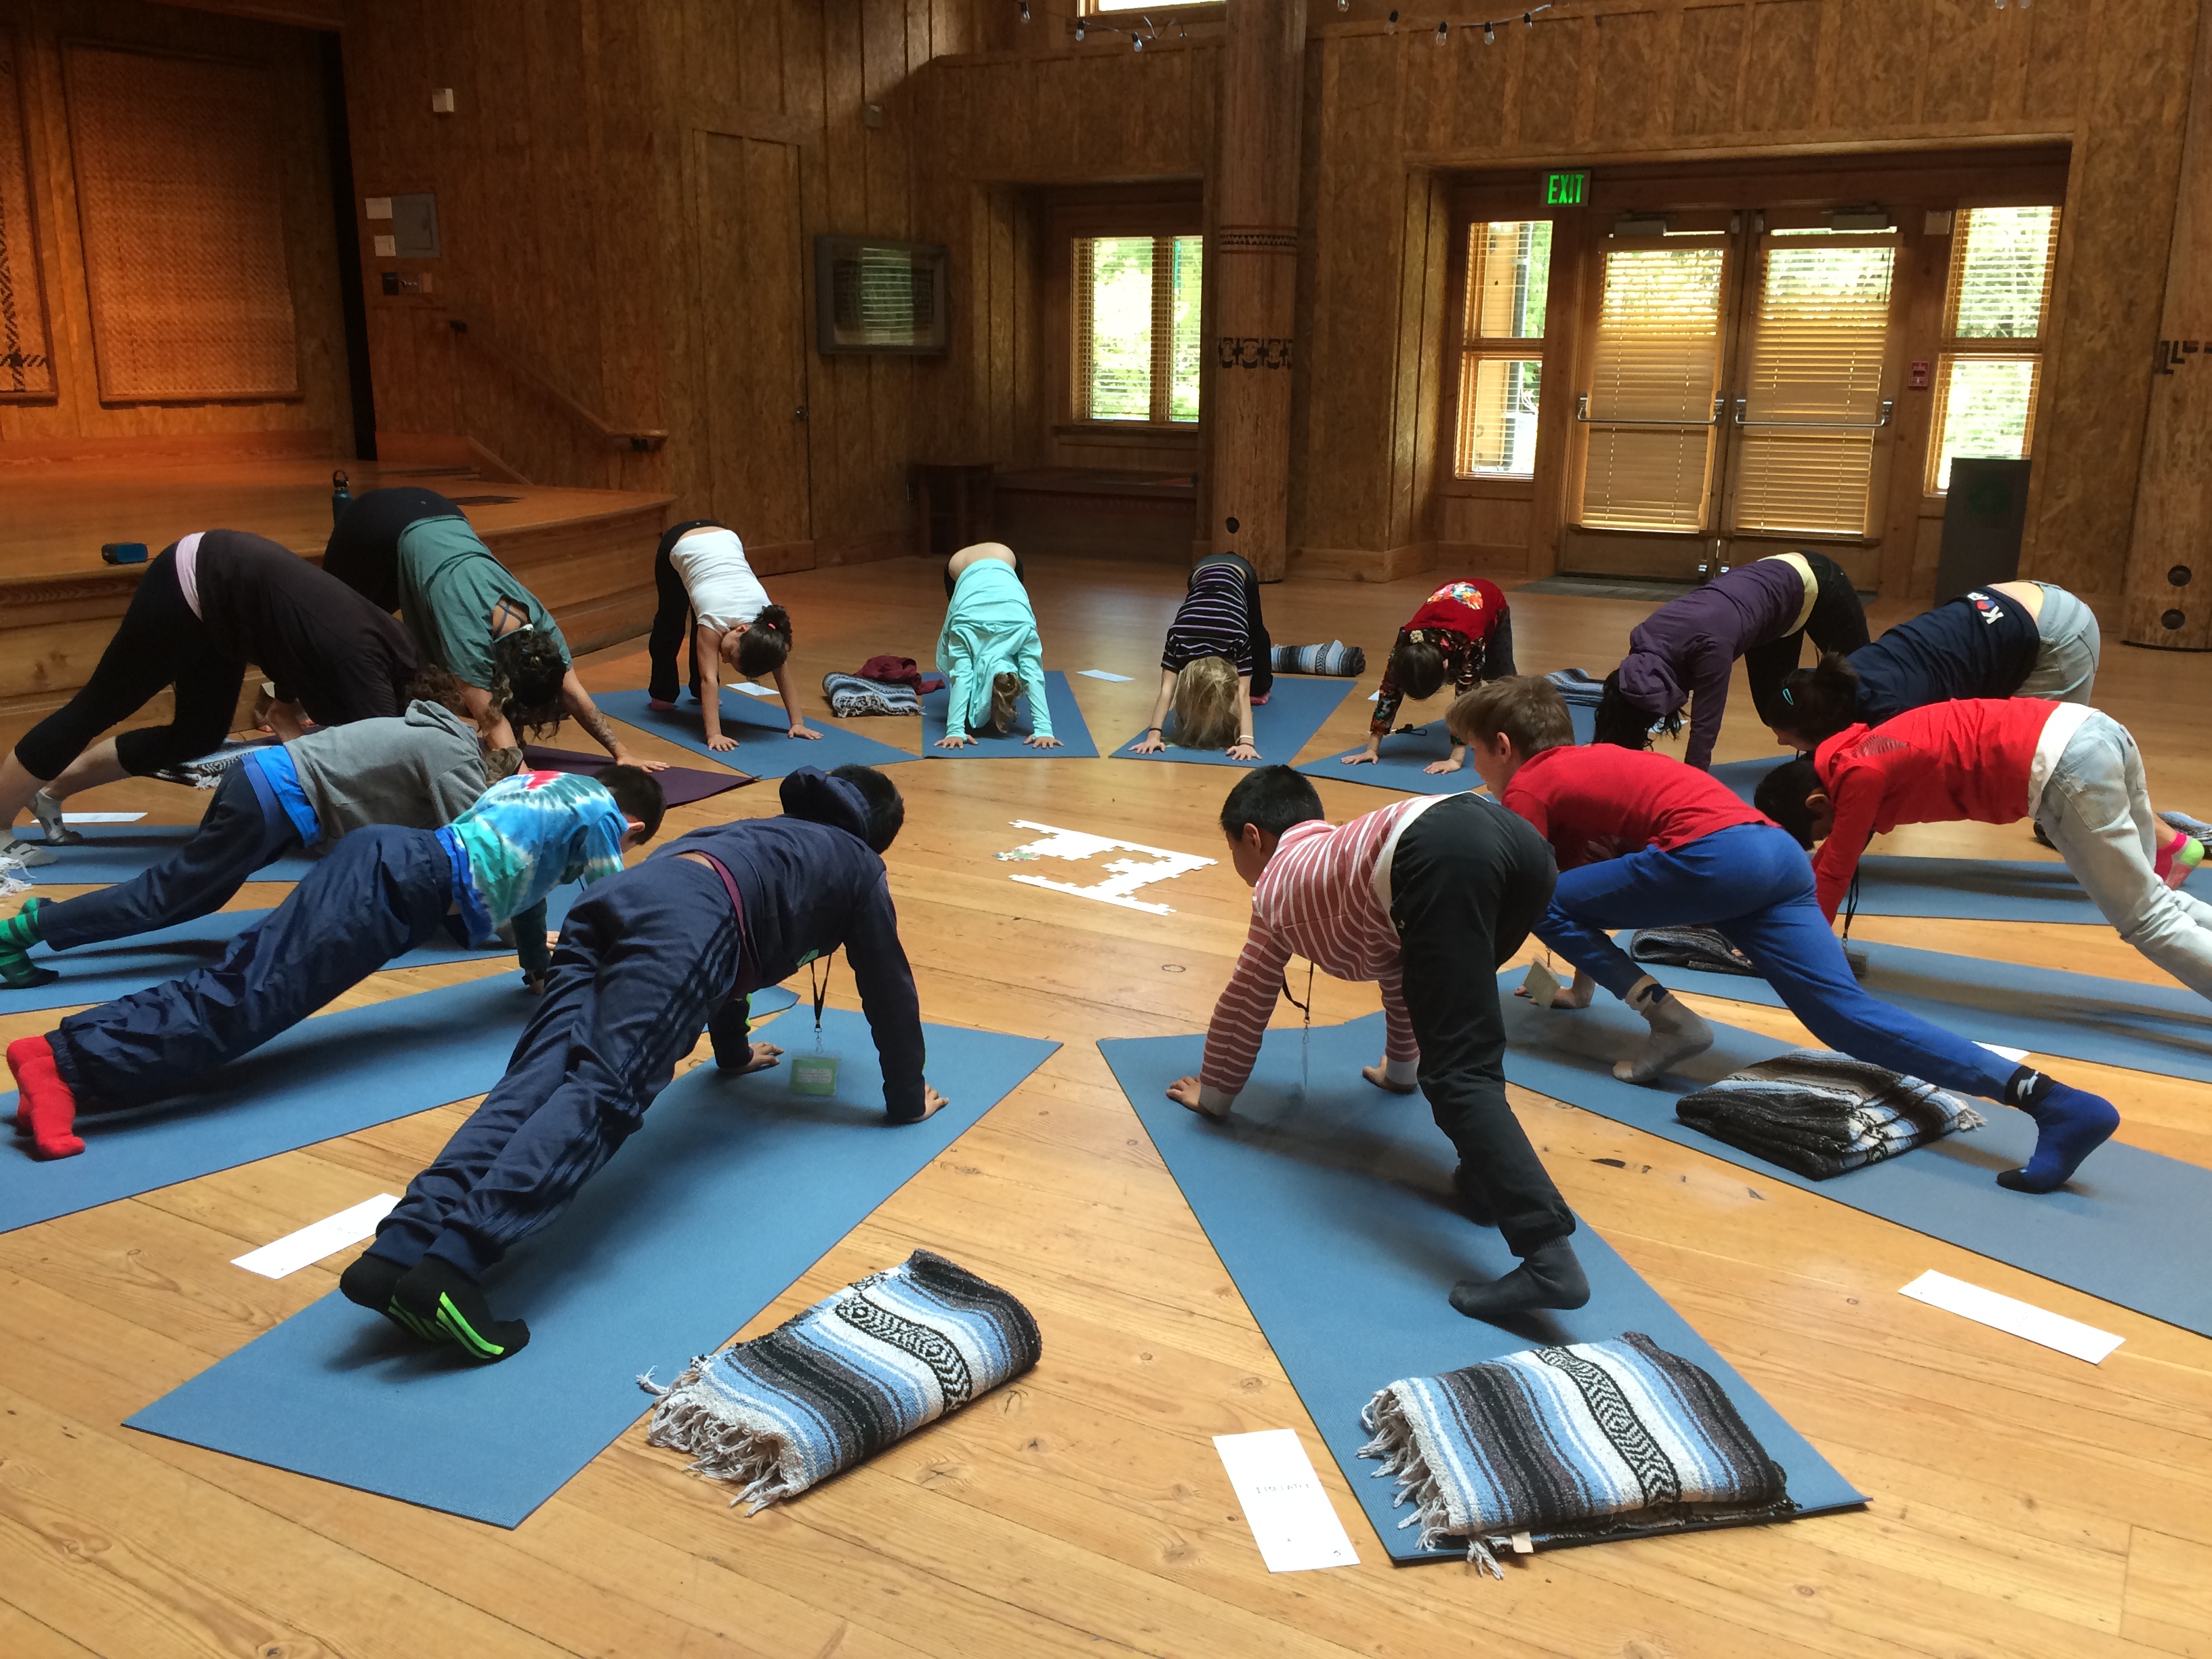 School Overnight Program students doing yoga in the Great Hall on IslandWood's Bainbridge Island campus.